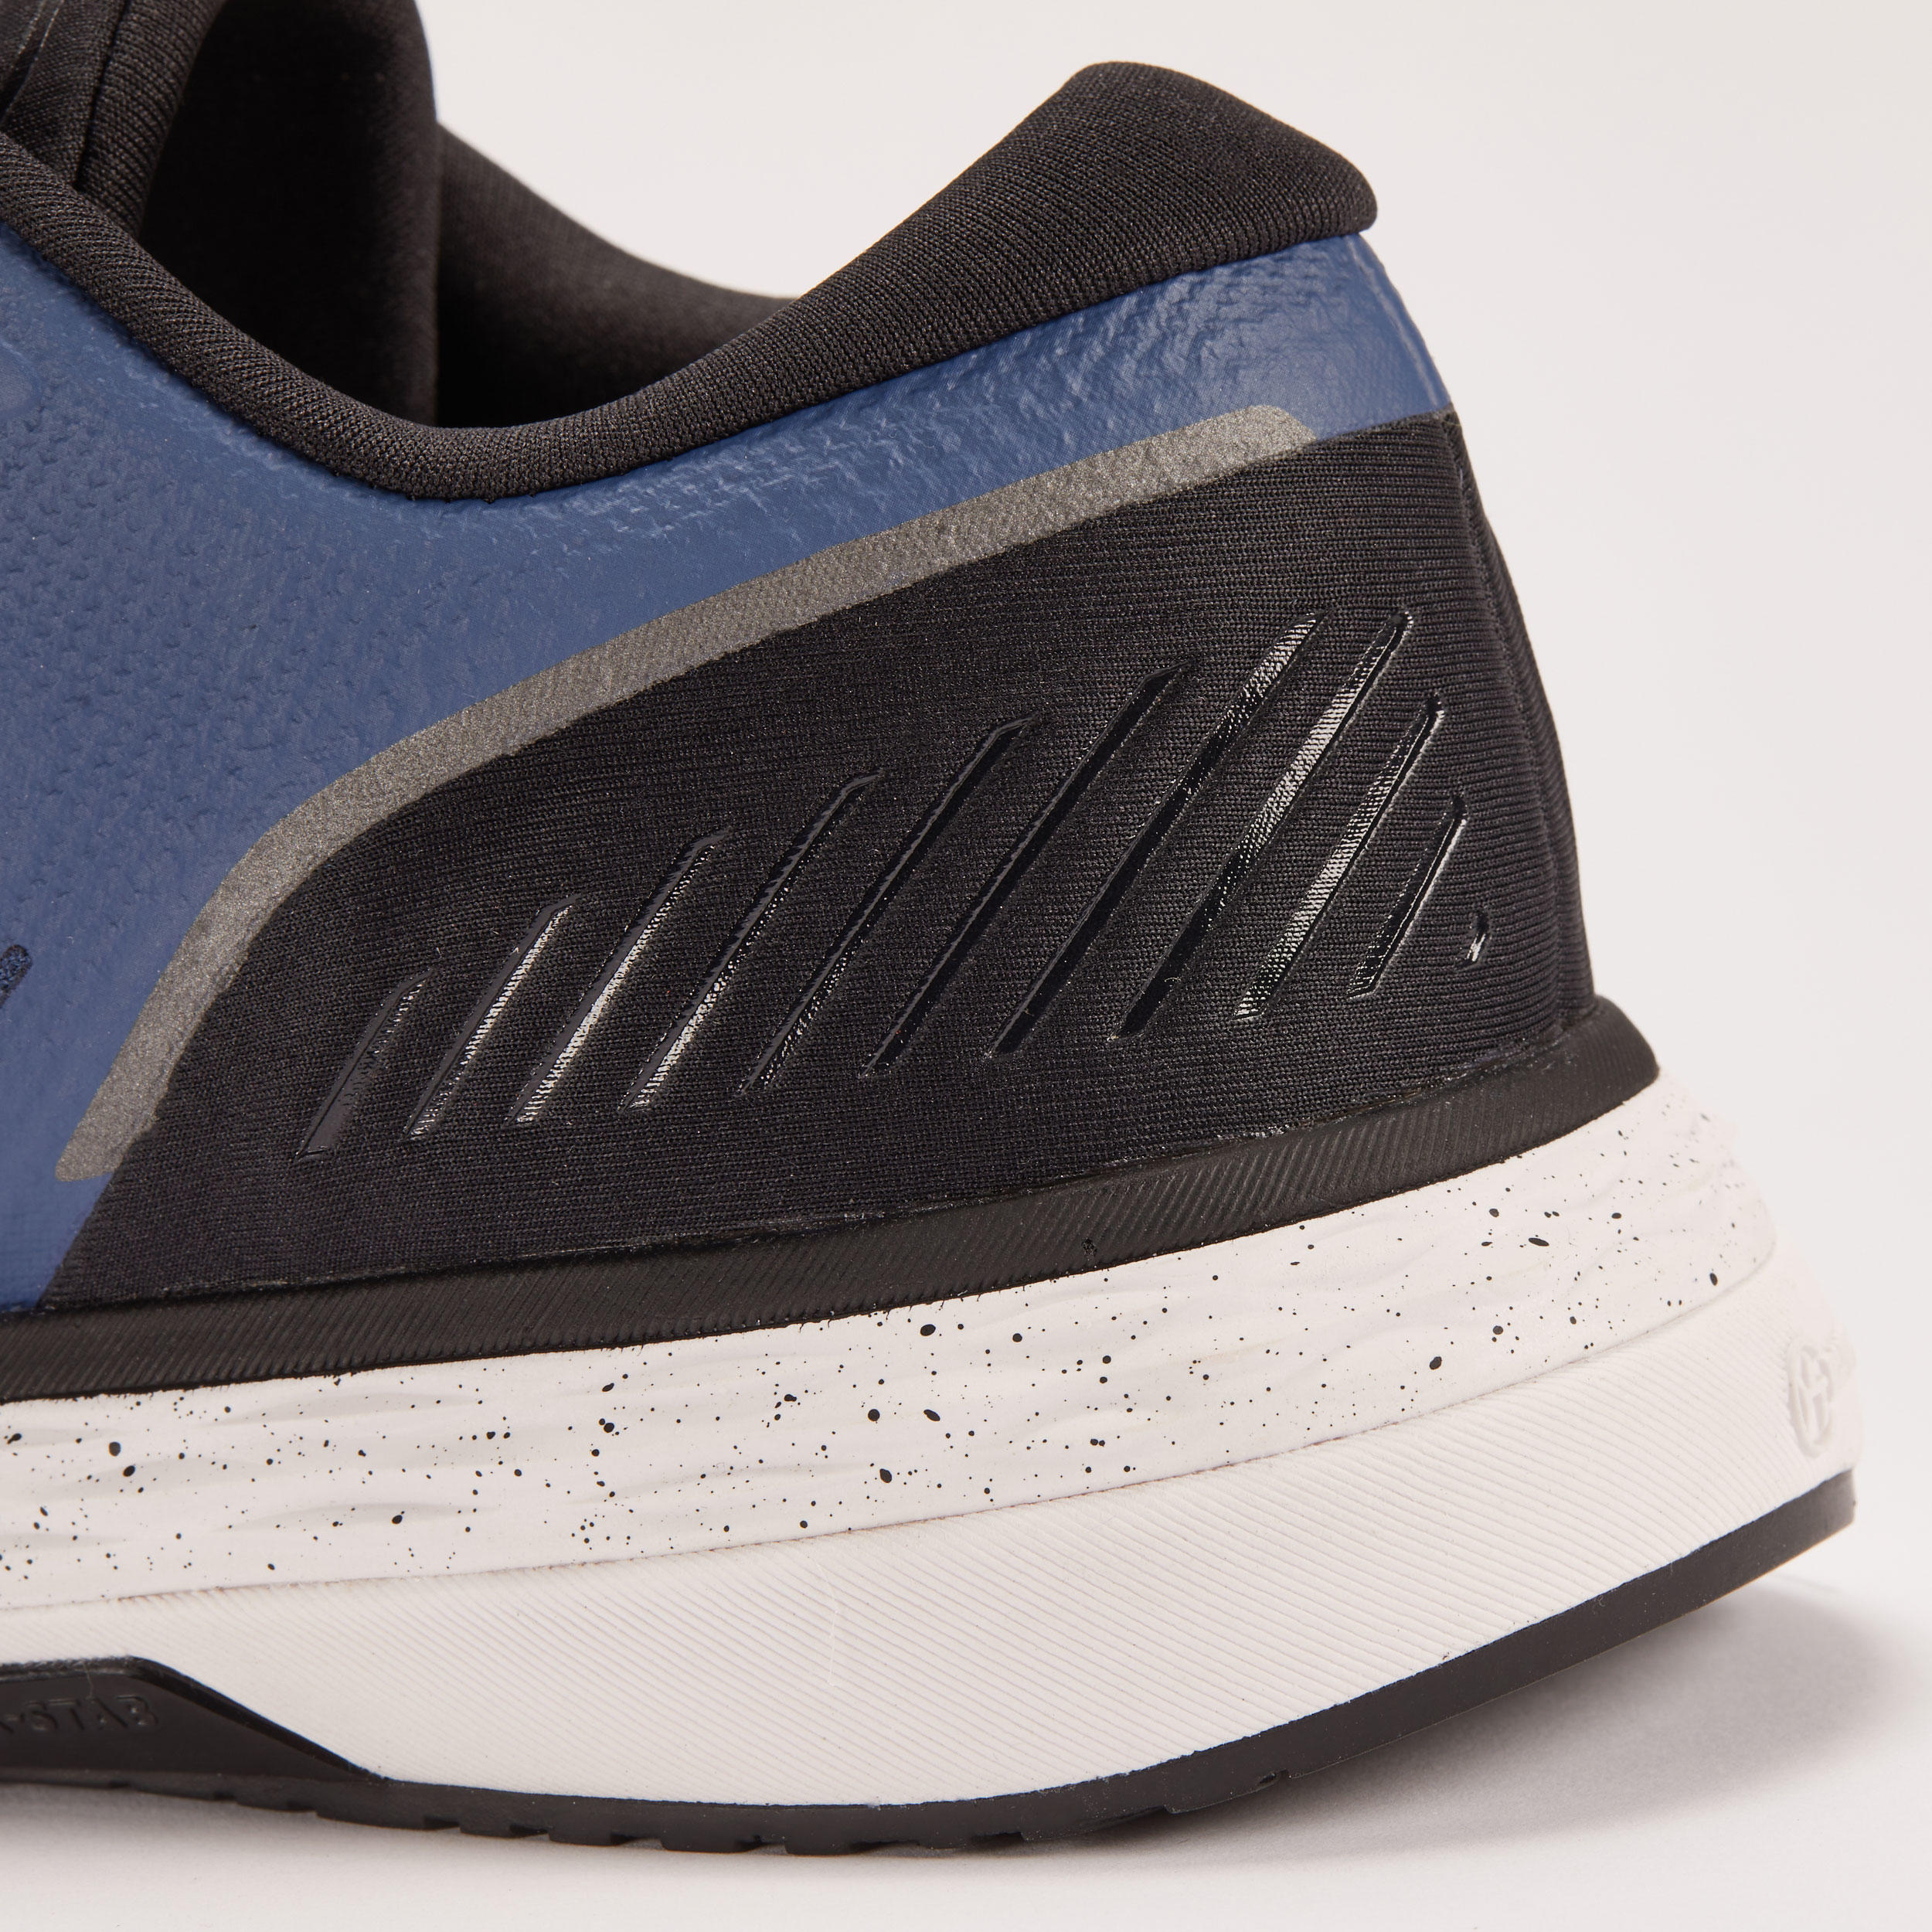 Kiprun KS500 Men's Running Shoes - slate blue - Limited Edition 4/9